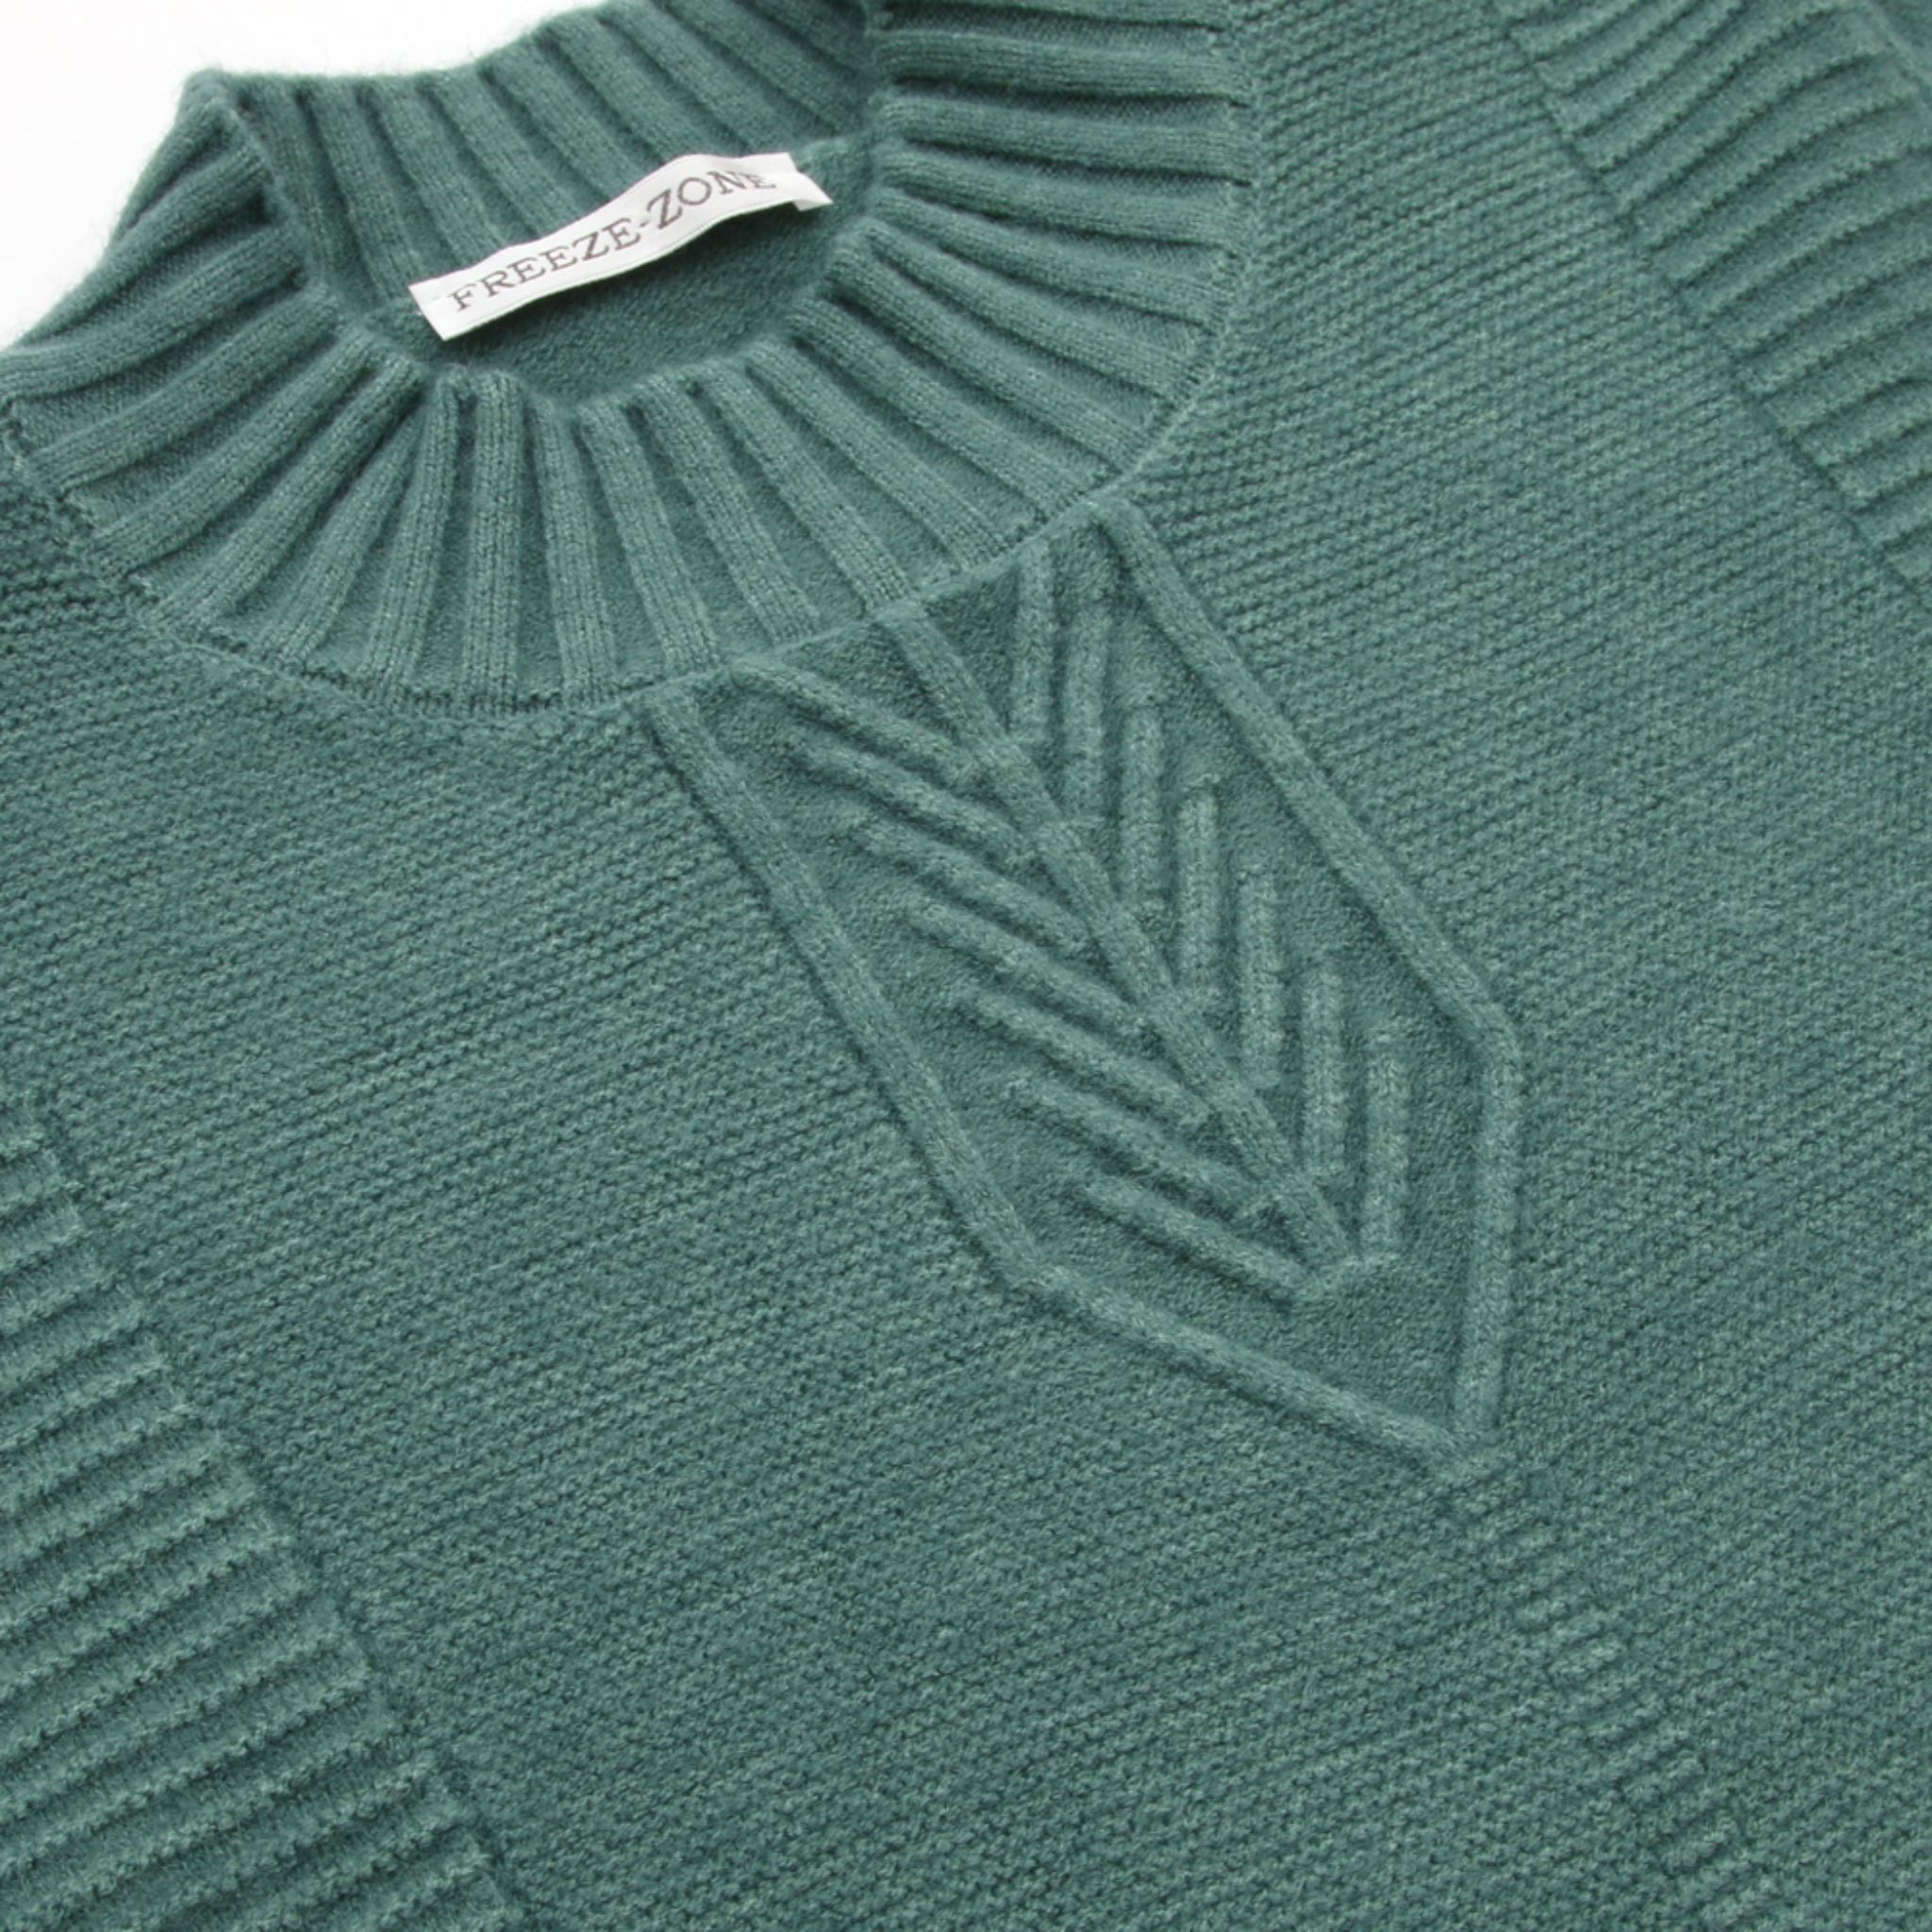 Freeze Zone Winter Sweater - Green